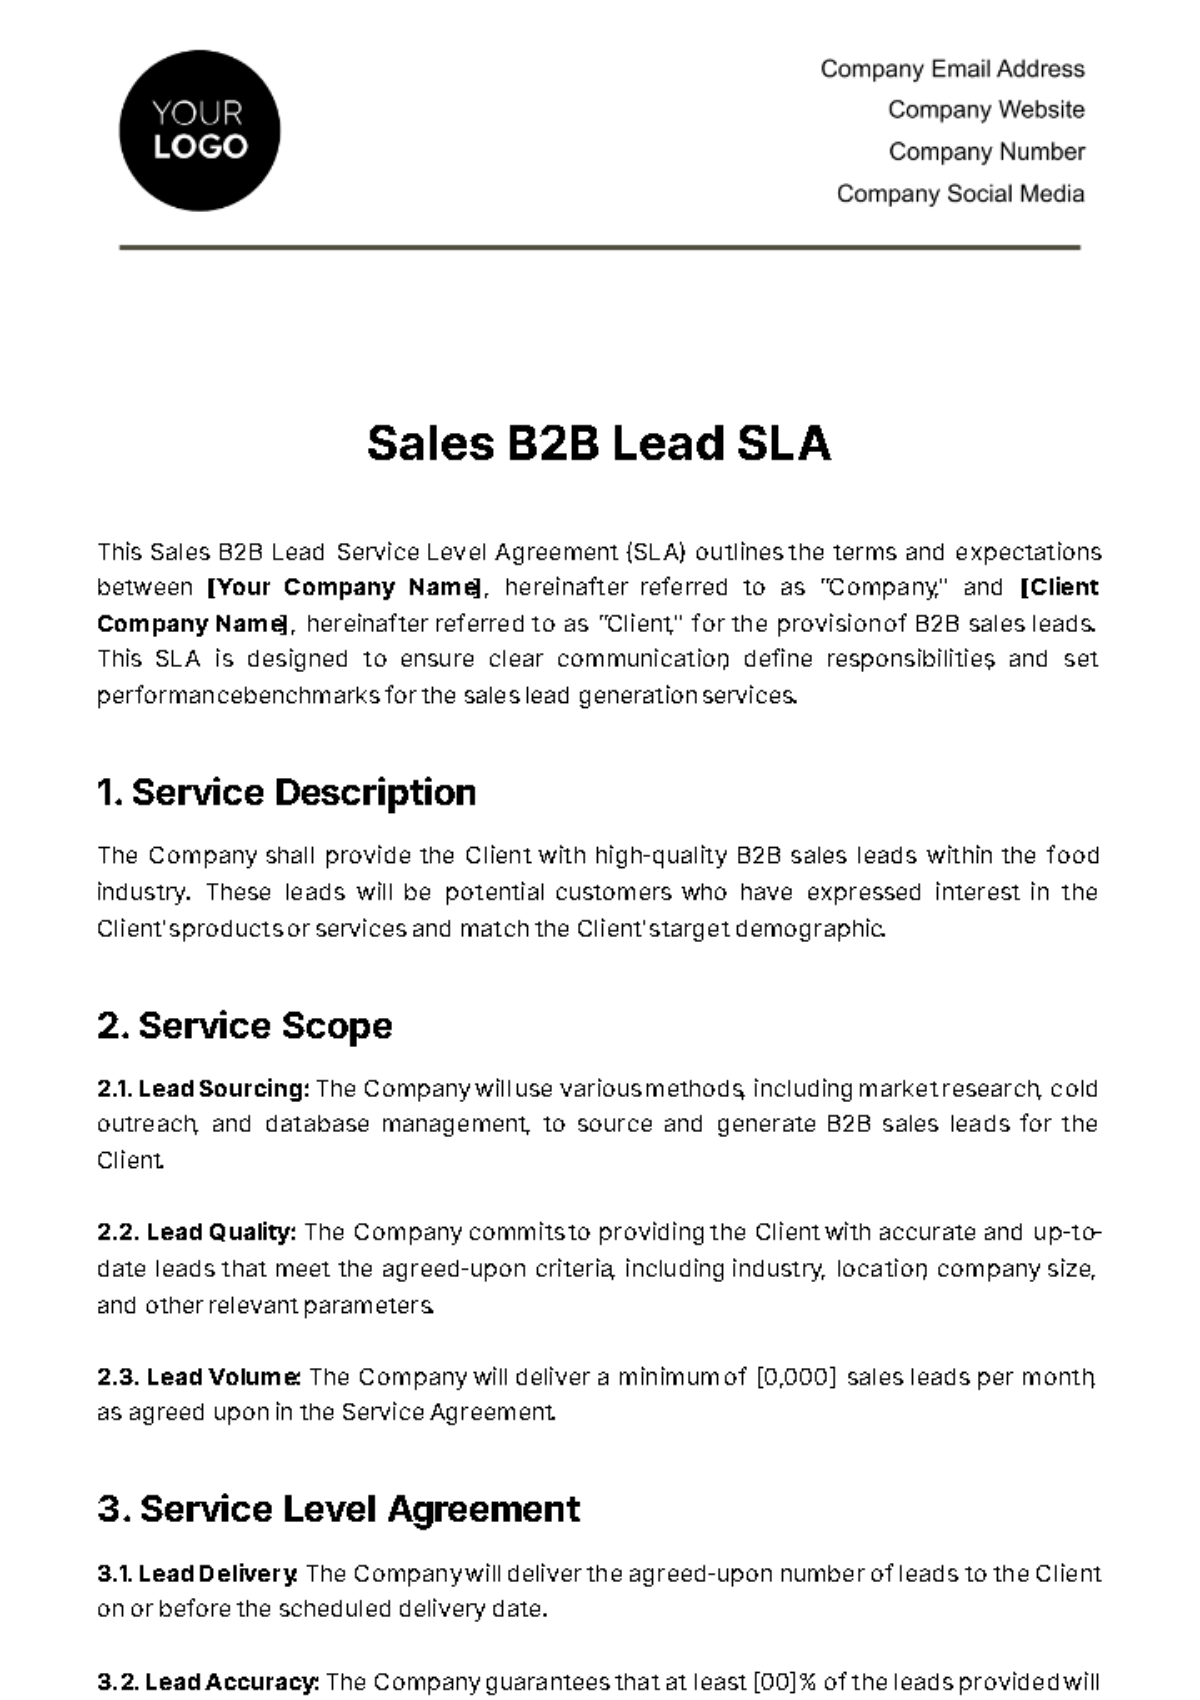 Free Sales B2B Lead SLA Template